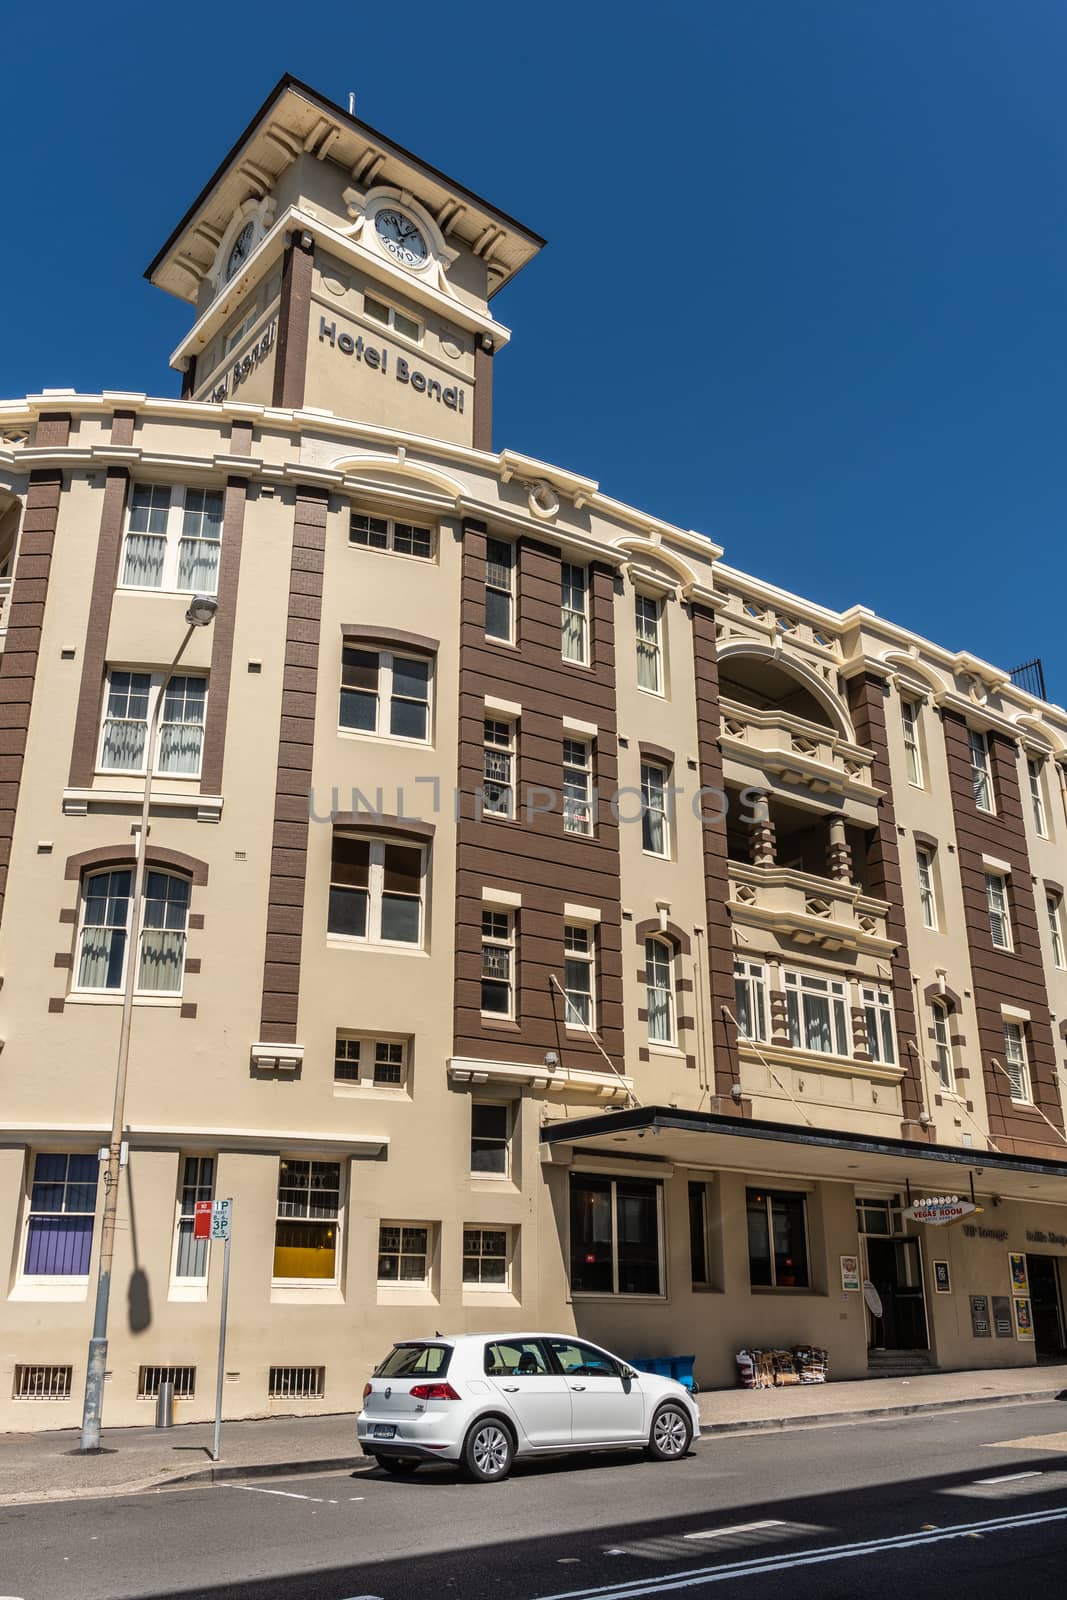 Sydney, Australia - February 11, 2019: Yellow and brown Bondi Hotel facade under blue sky in Bondi Beach. Street scene with parked car.